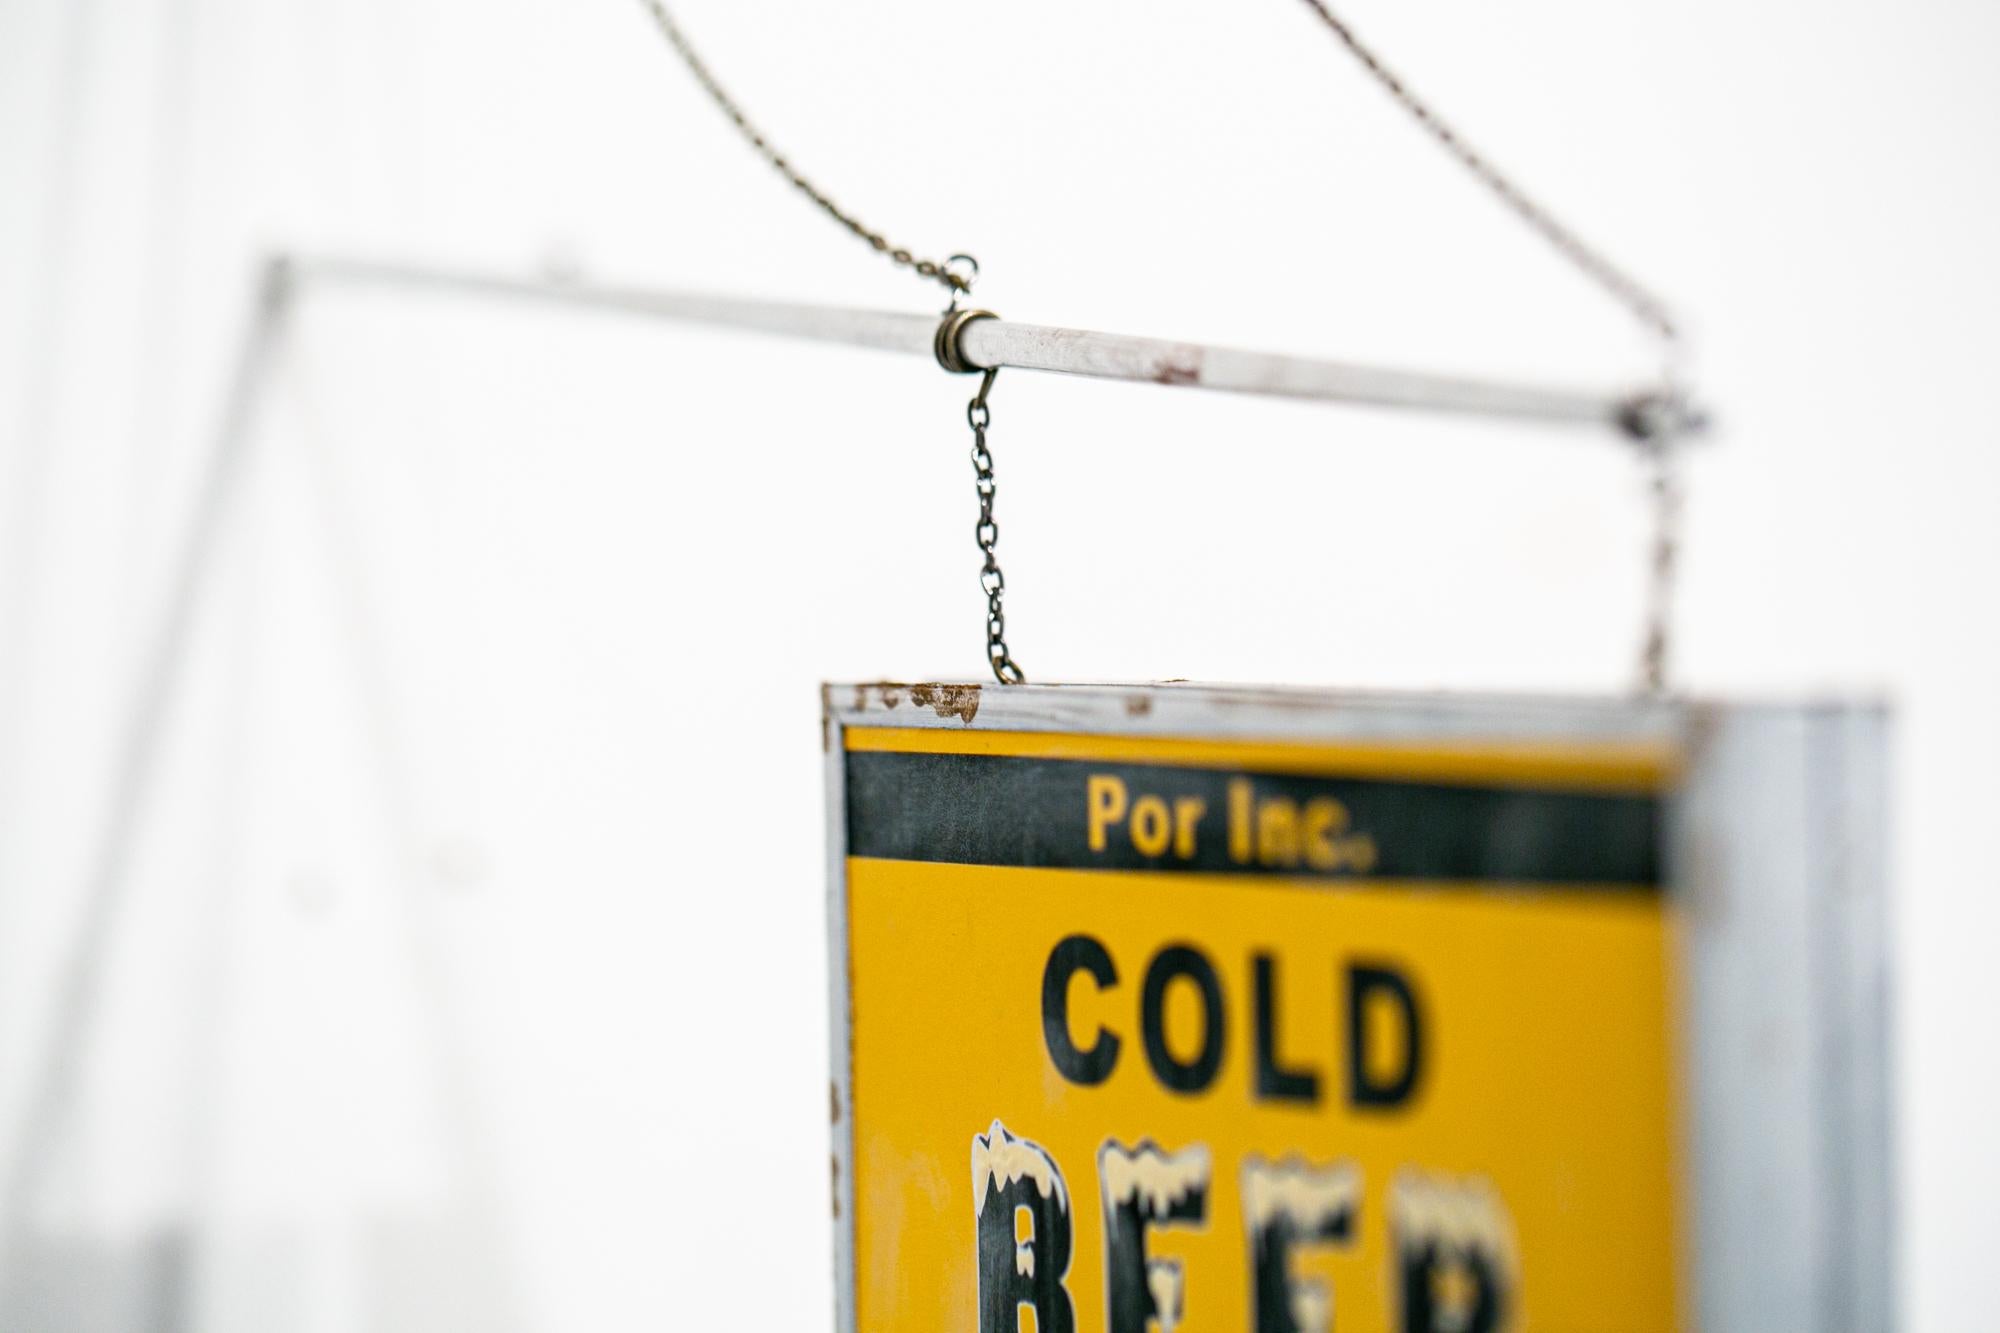 Cold Beer, Por Inc - White Still-Life by Drew Leshko